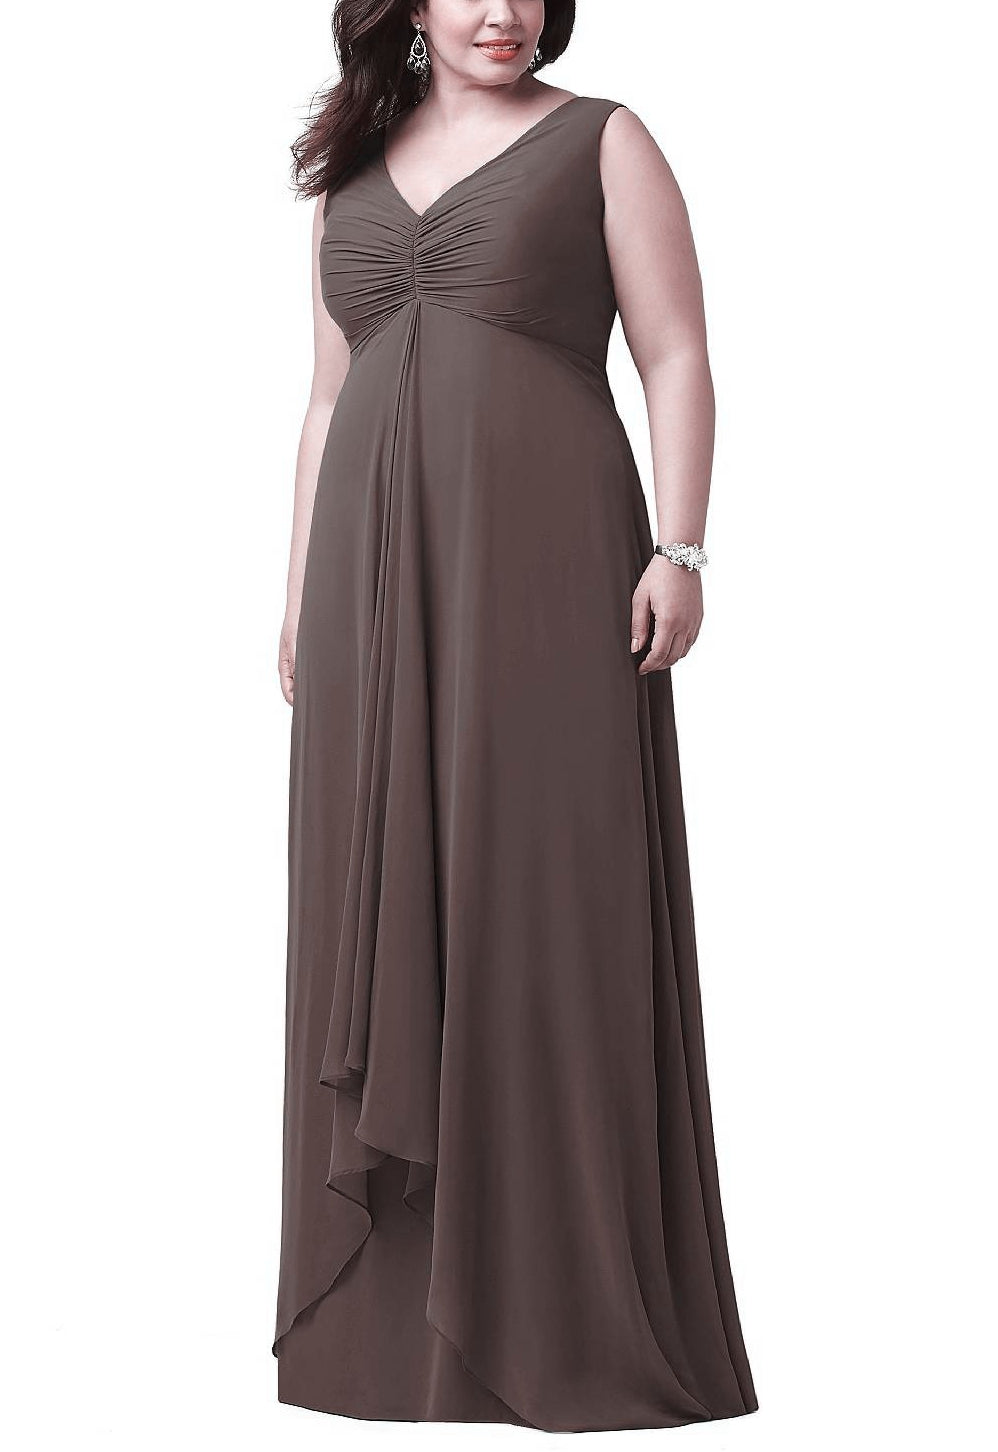 Brown Long V-neck Plus Size Bridesmaid Dress BPPBD016